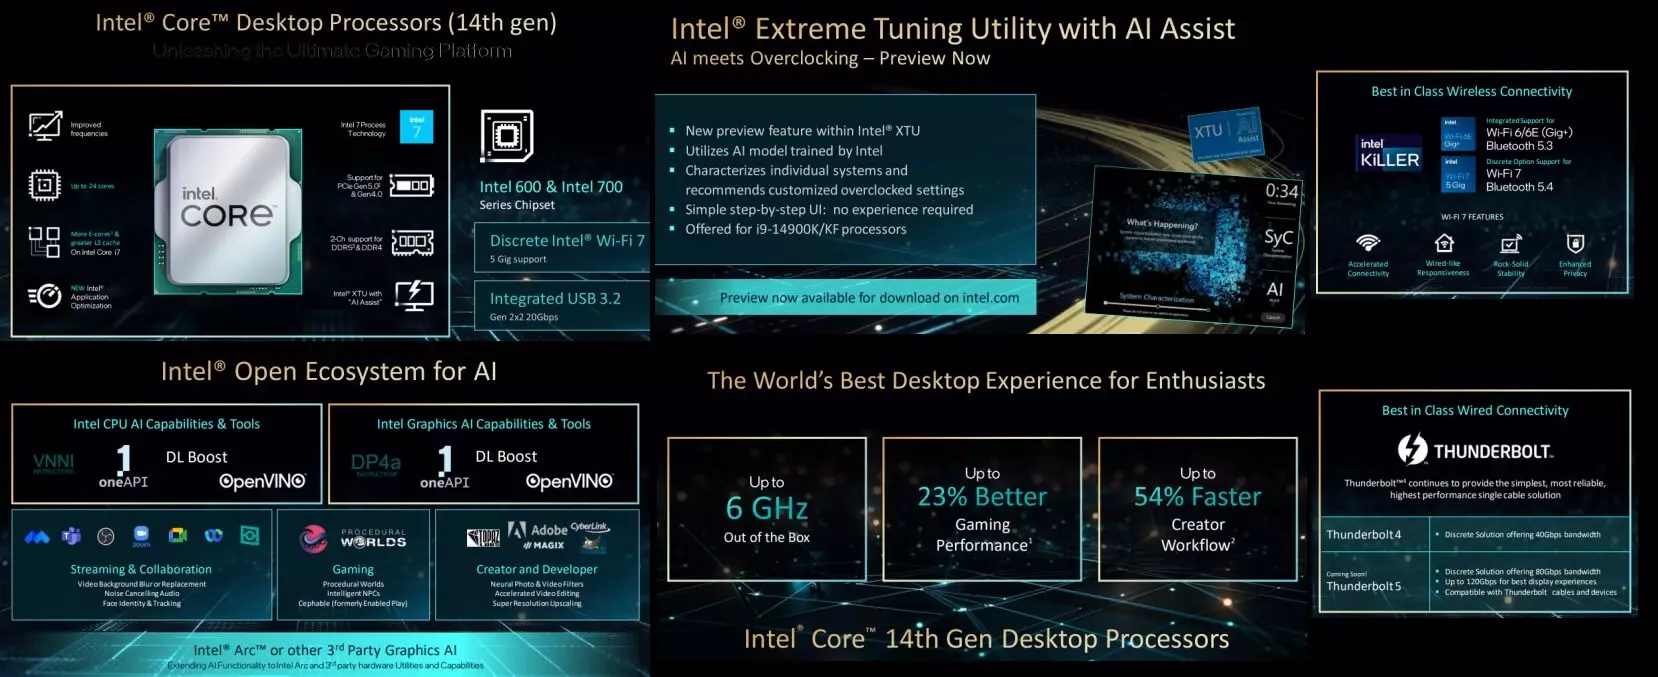 Intel Core 14th Gen processor features.